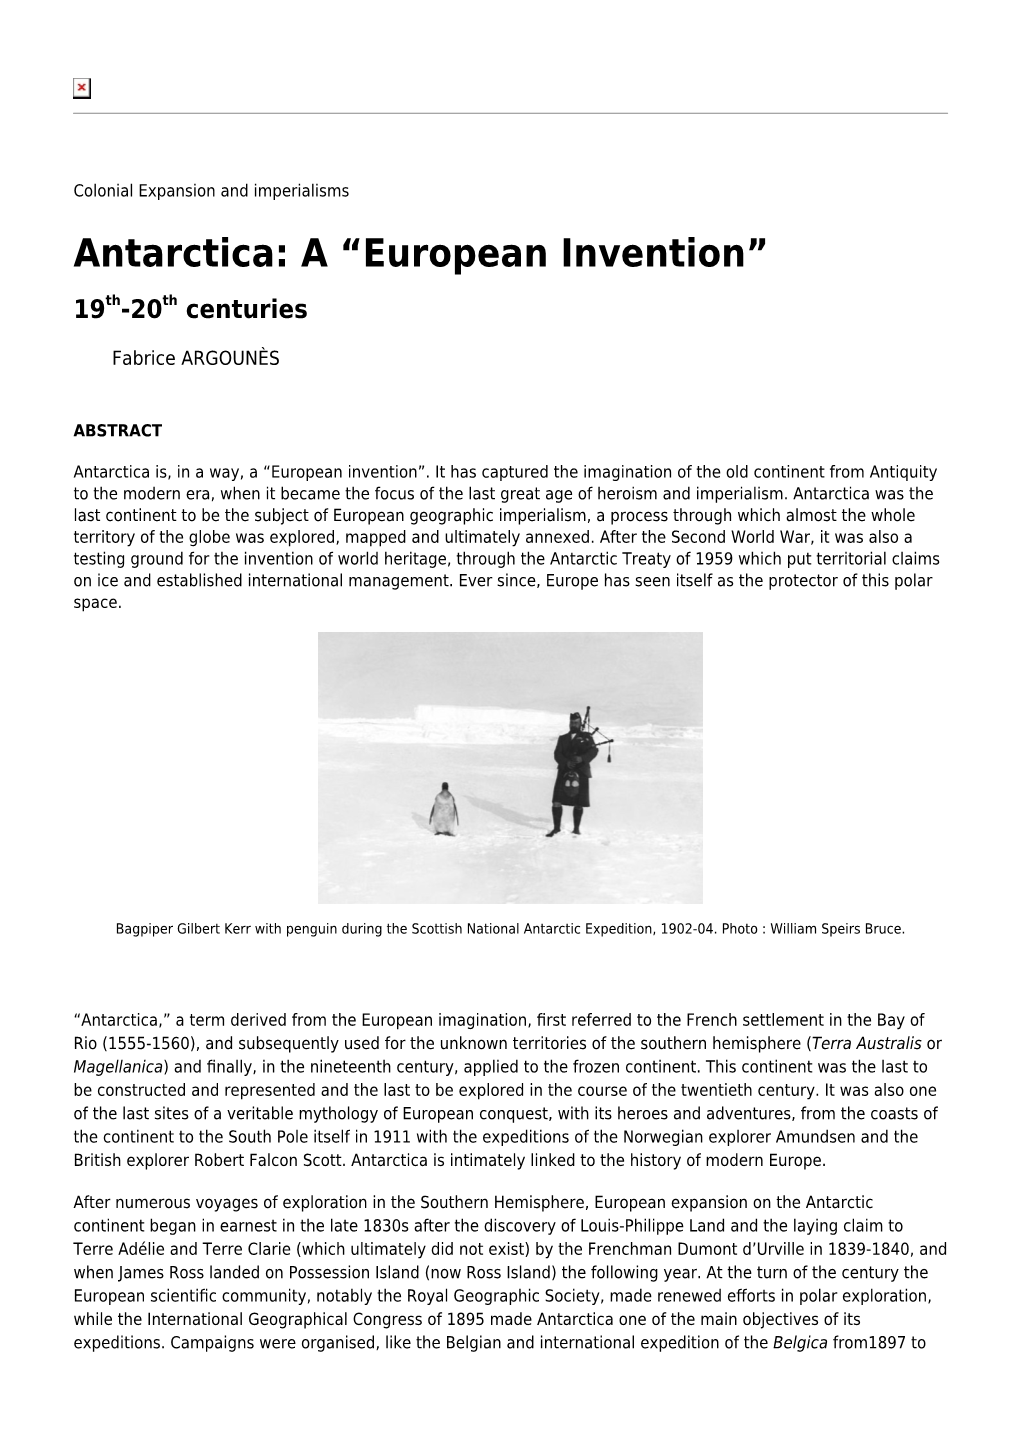 Antarctica: a “European Invention” 19Th-20Th Centuries